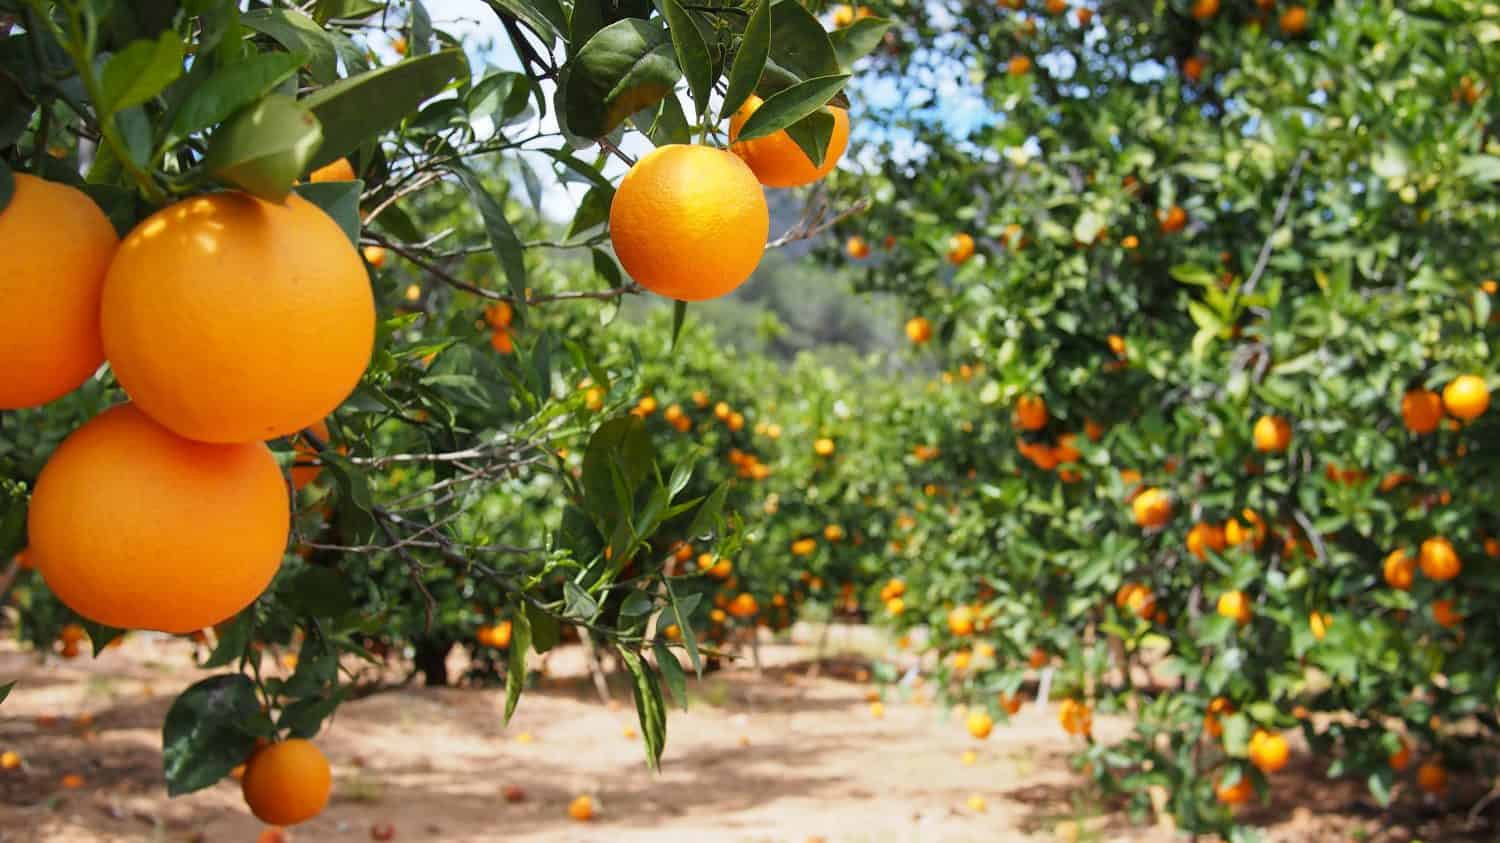 Bloomy orange garden in Valencia. Spain.